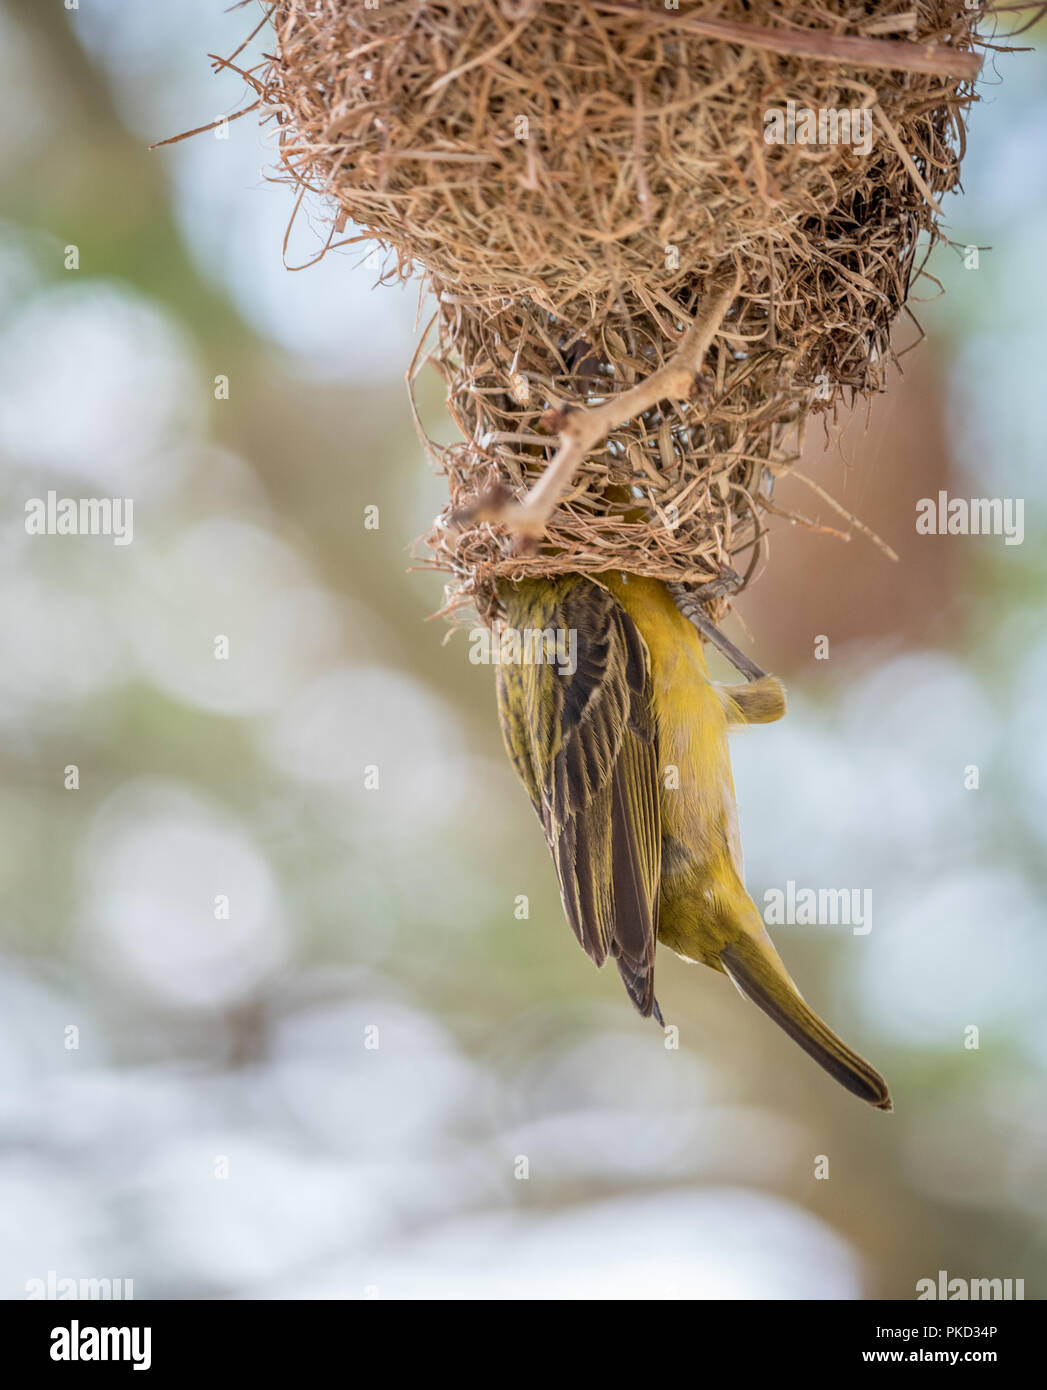 Female Lesser Masked Weaver bird inspecting the nest a male bird has built for her. Stock Photo